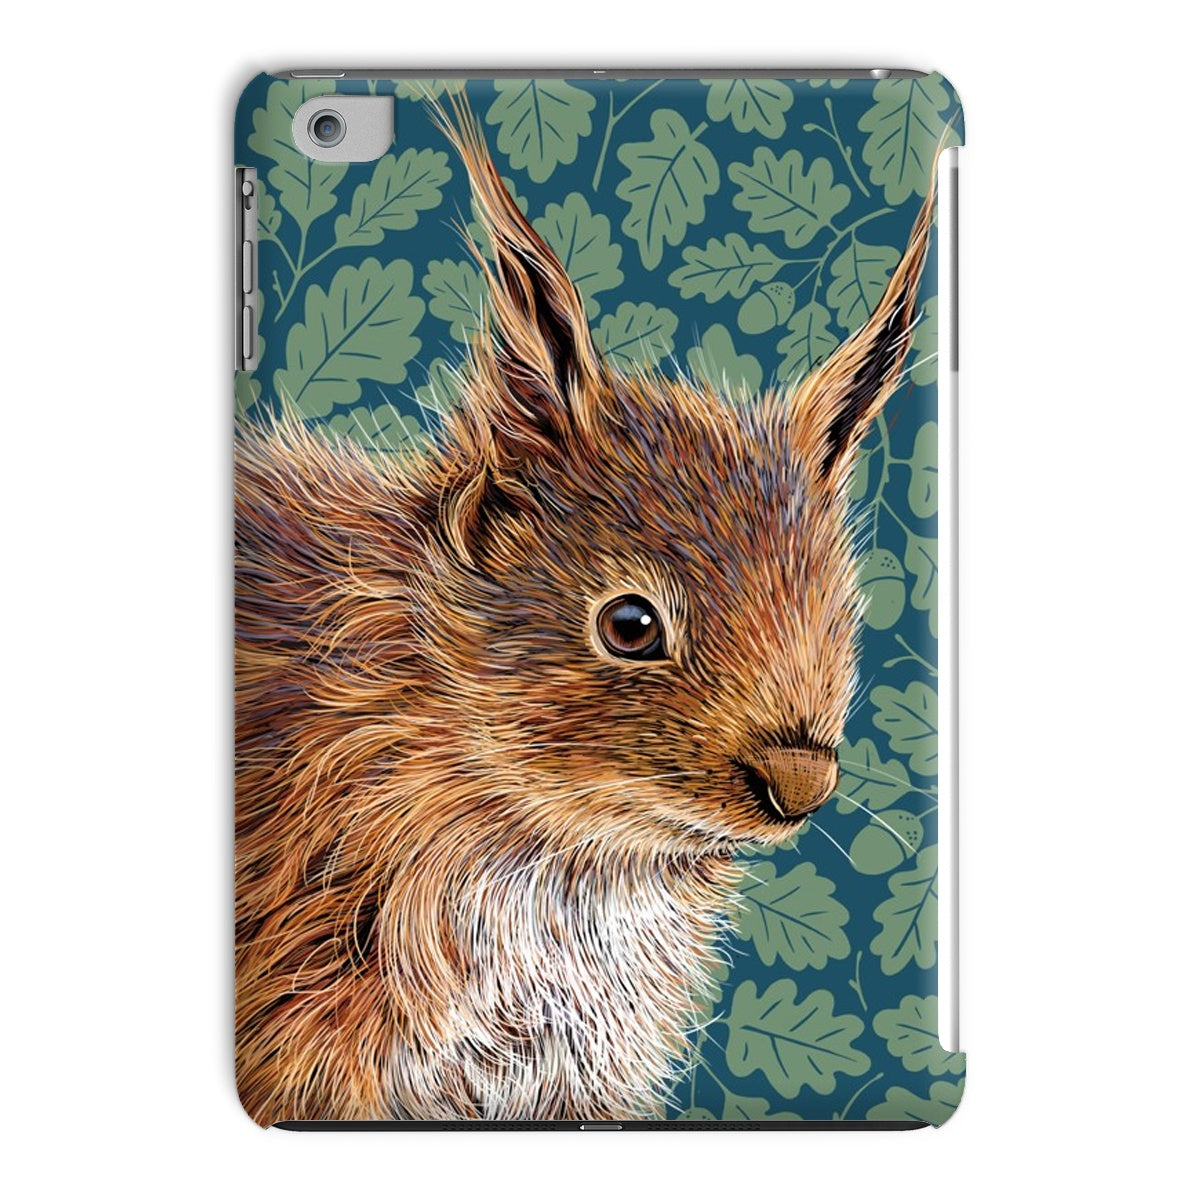 Squirrel Tablet Cases